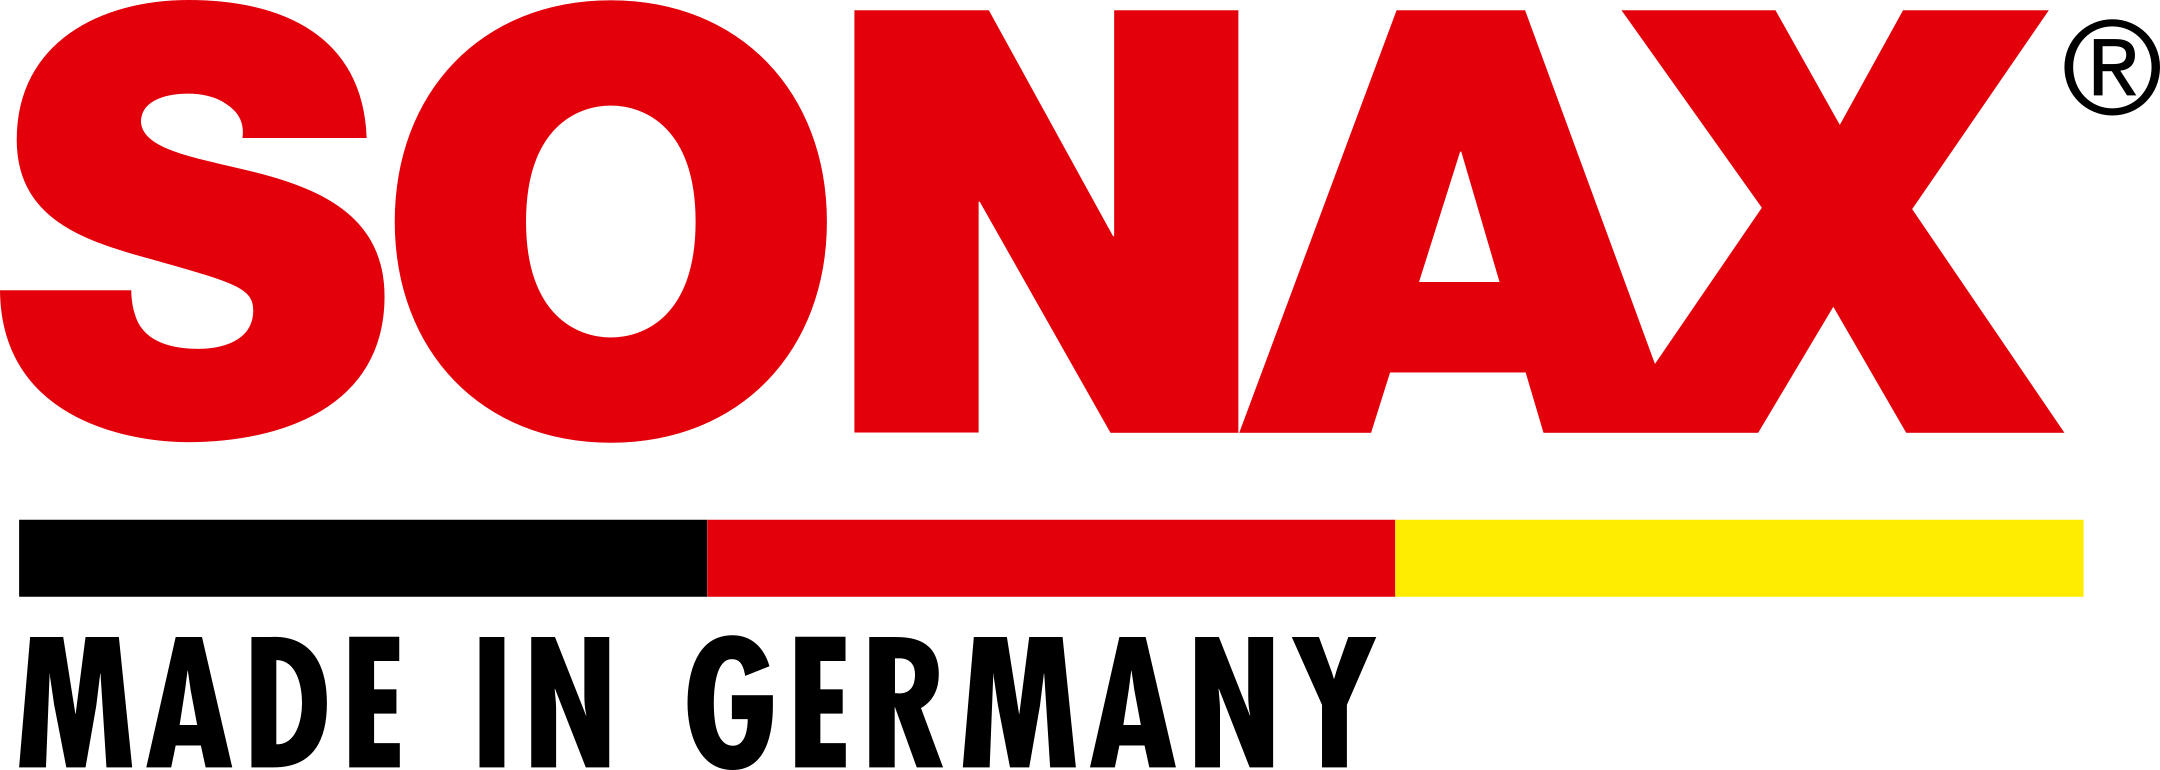 sonax logo 1 - Sonax Logo